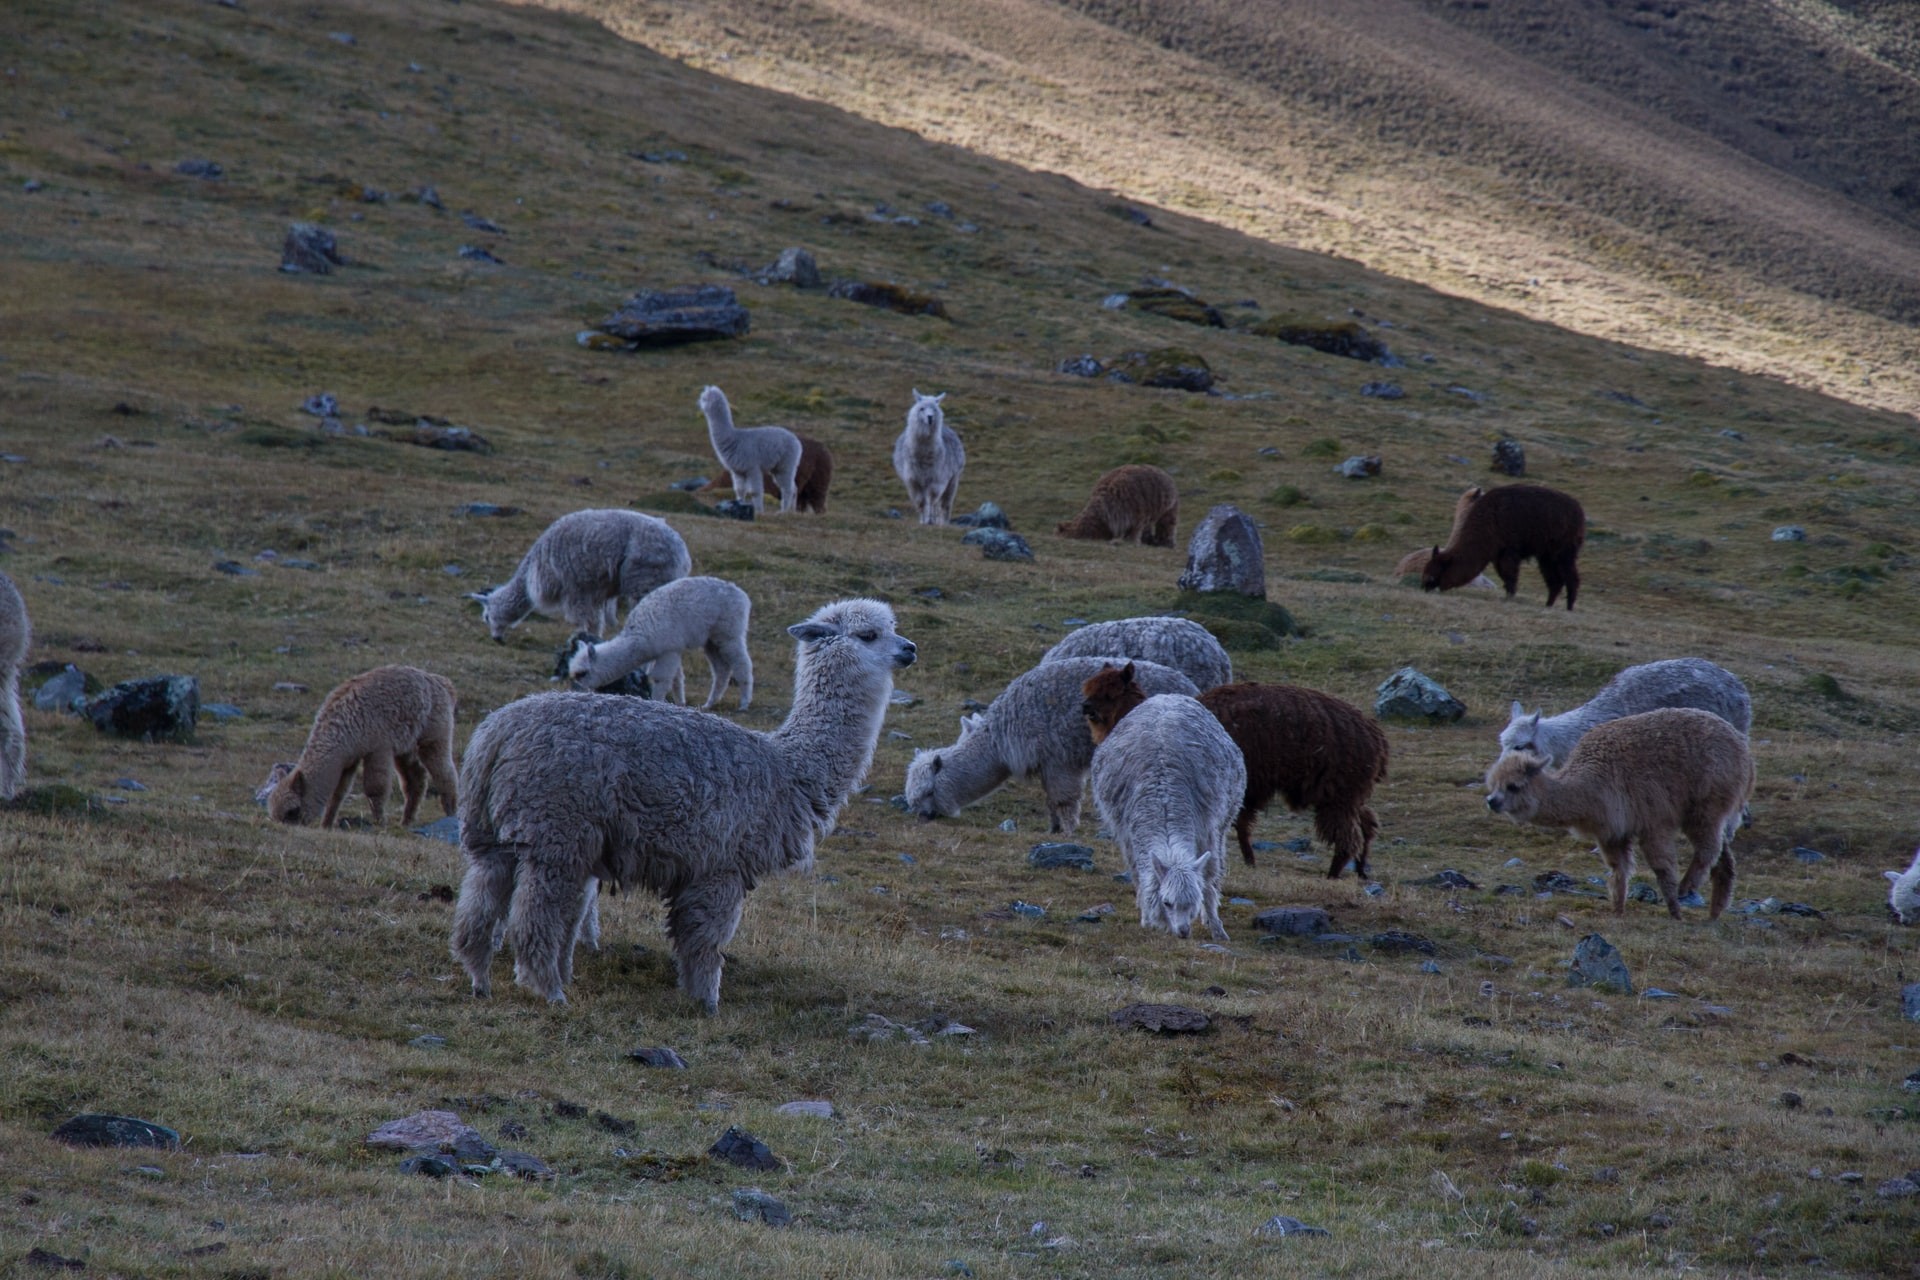 As alpacas podem ser suscetíveis a hospedar o novo coronavírus  (Foto: Paul Summers / Unsplash)